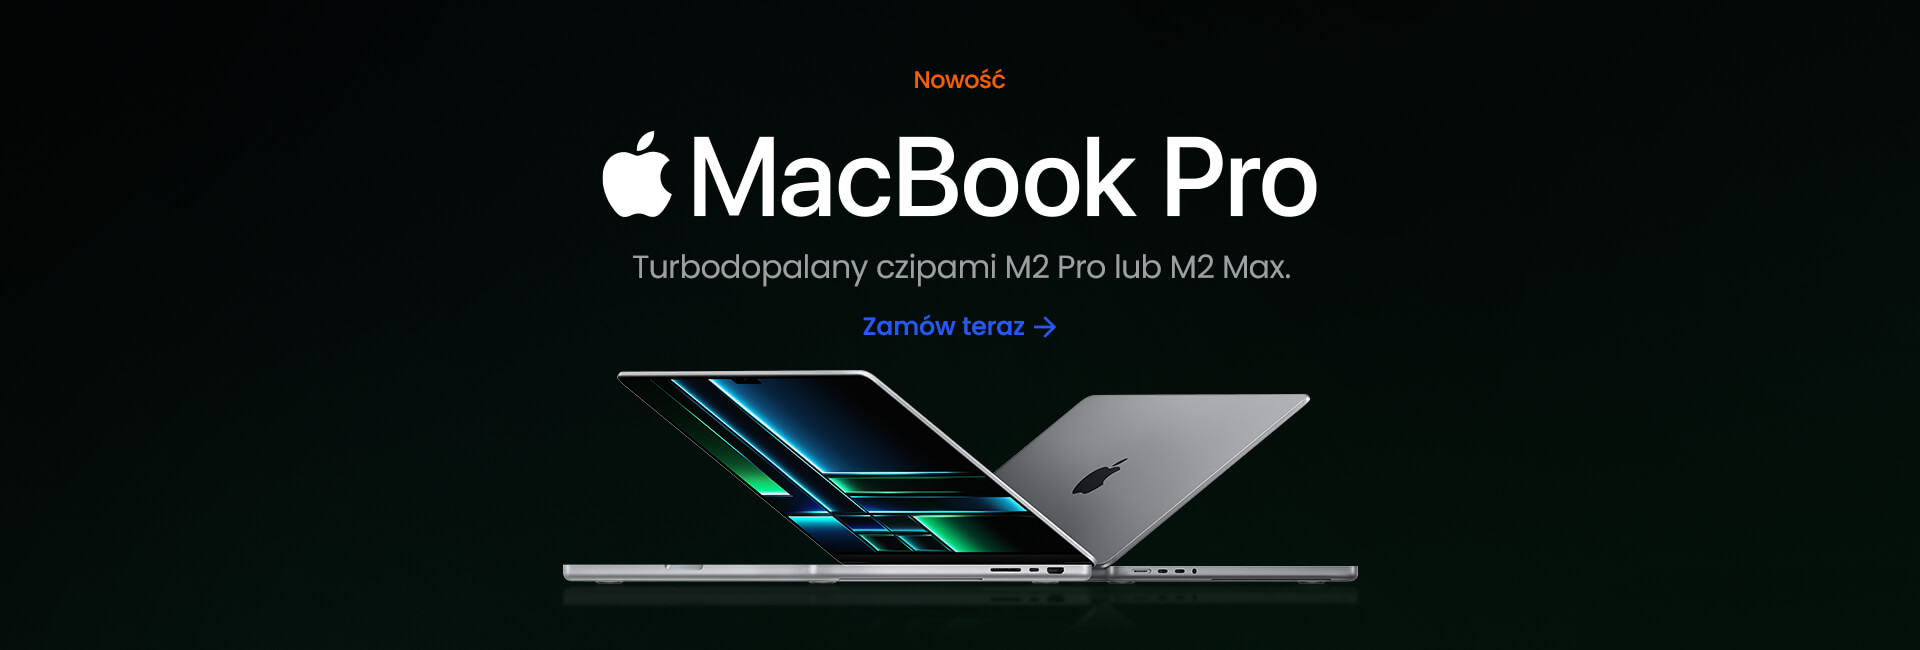 Nowość - MacBook Pro M2